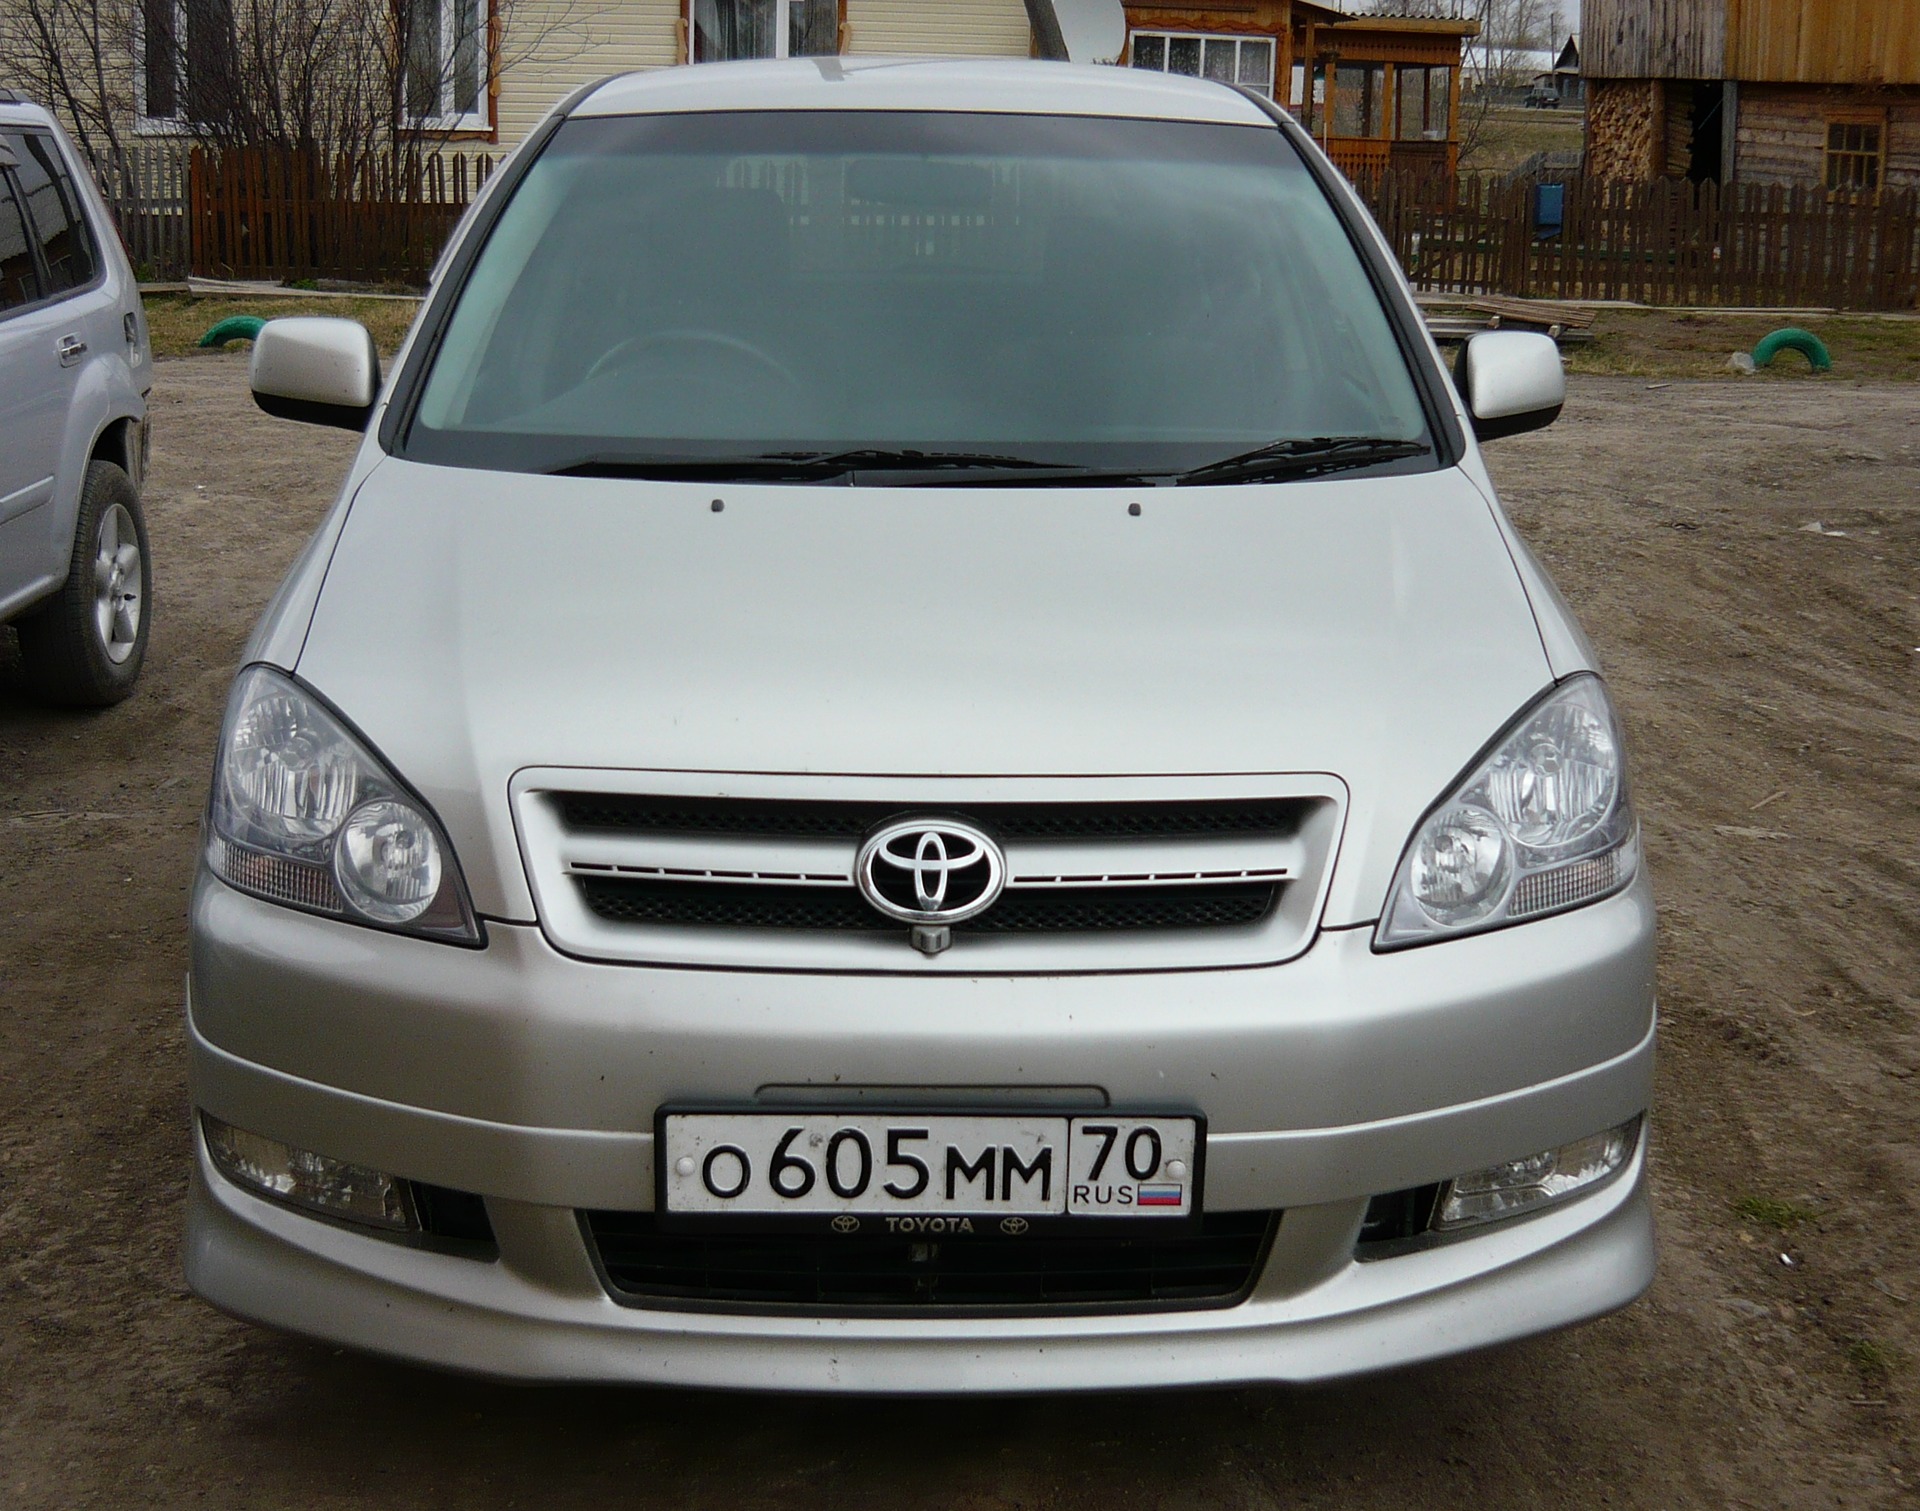 9 2011 Toyota Ipsum 24 2001